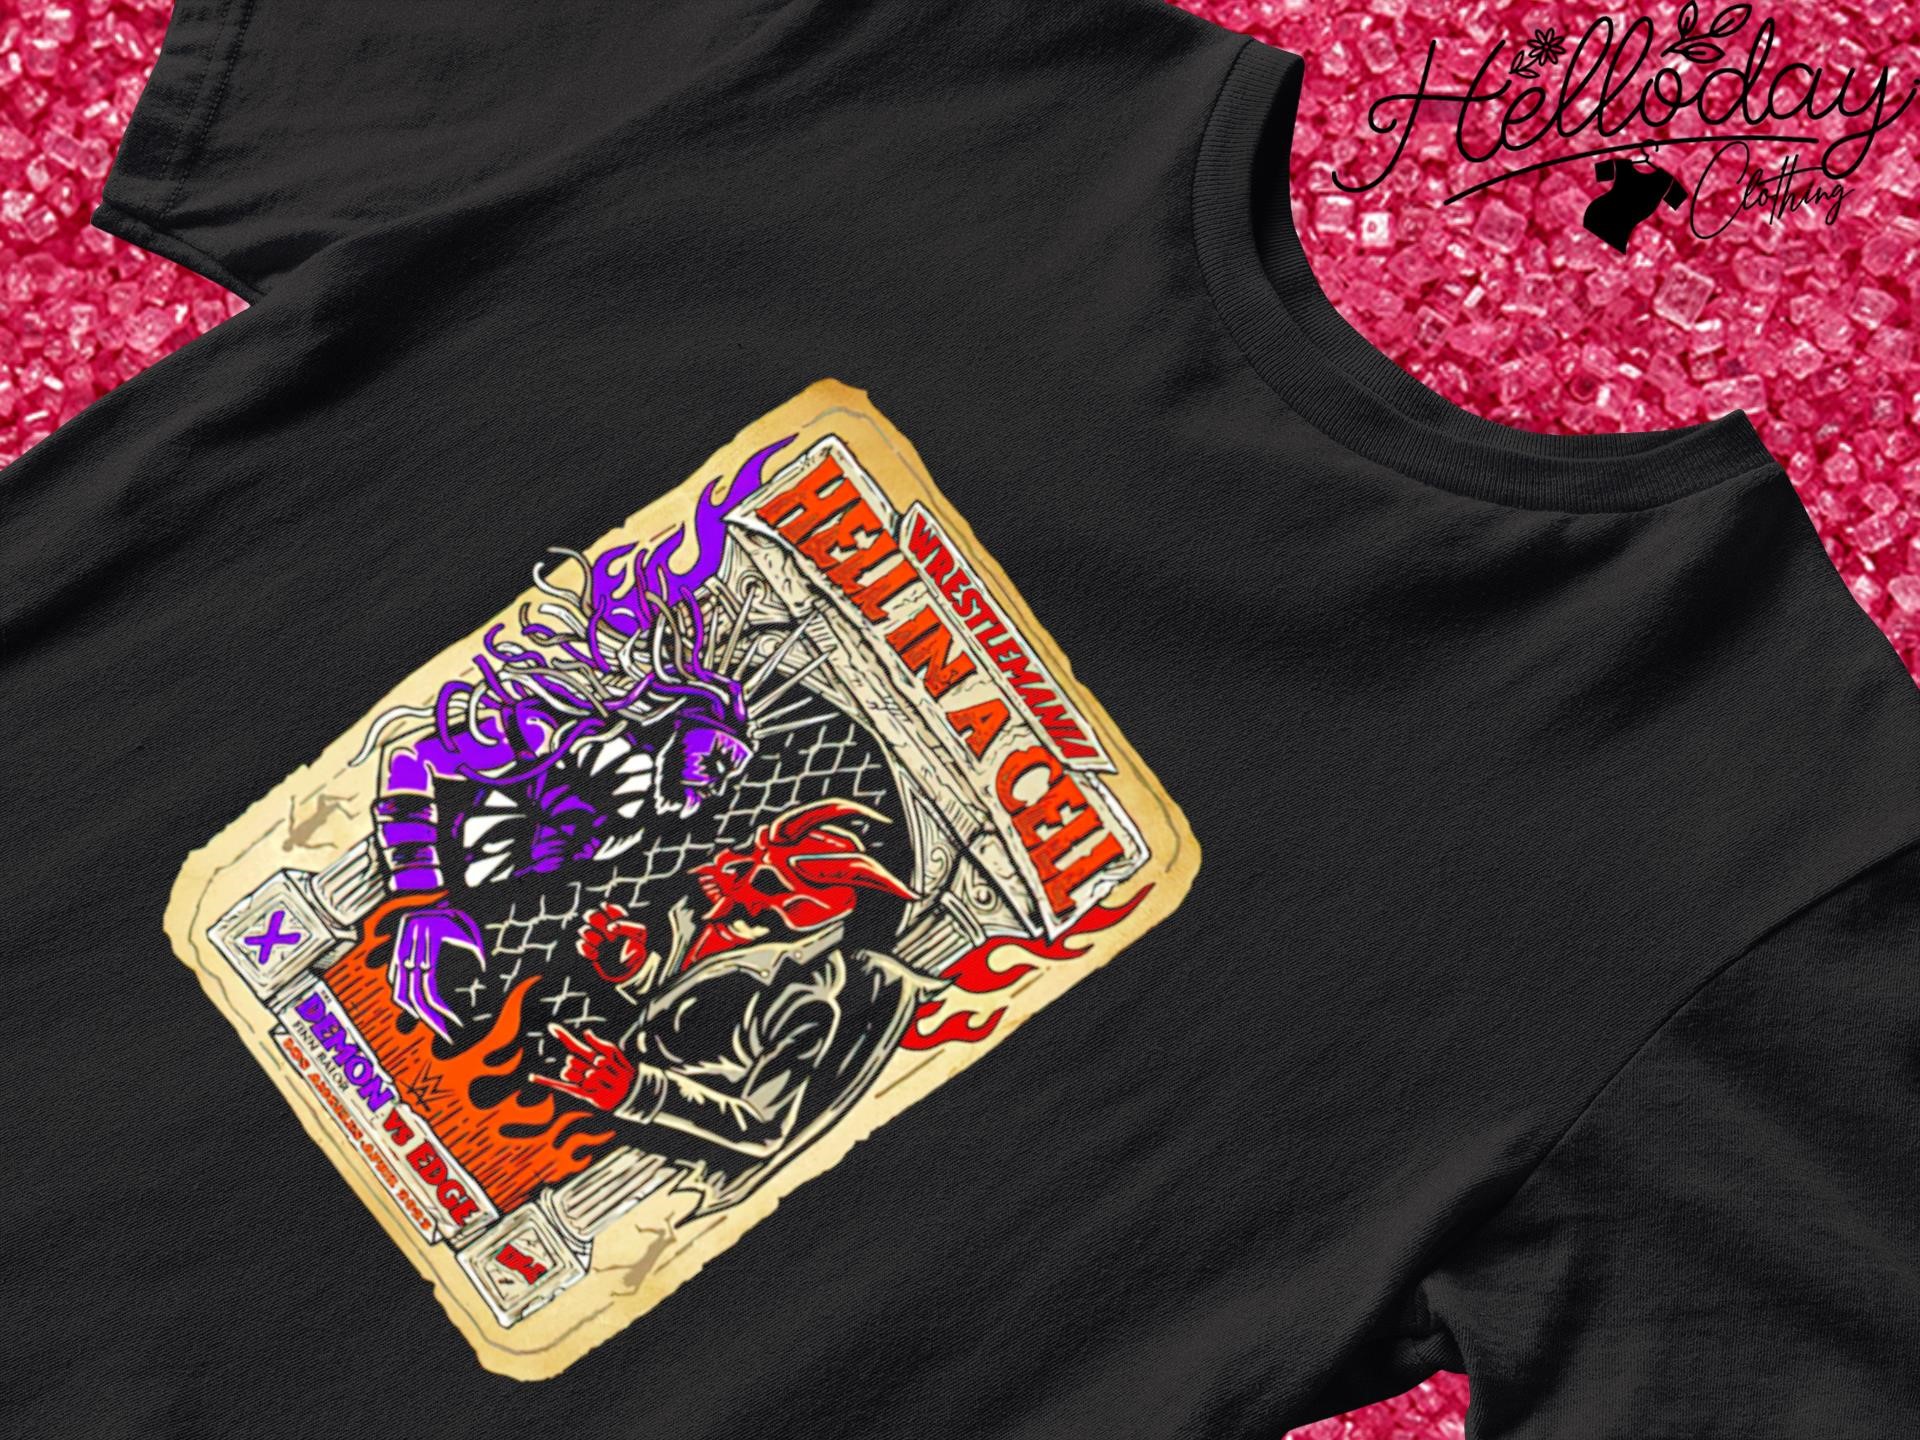 Demon vs Edge Wrestlemania hell in a cell shirt